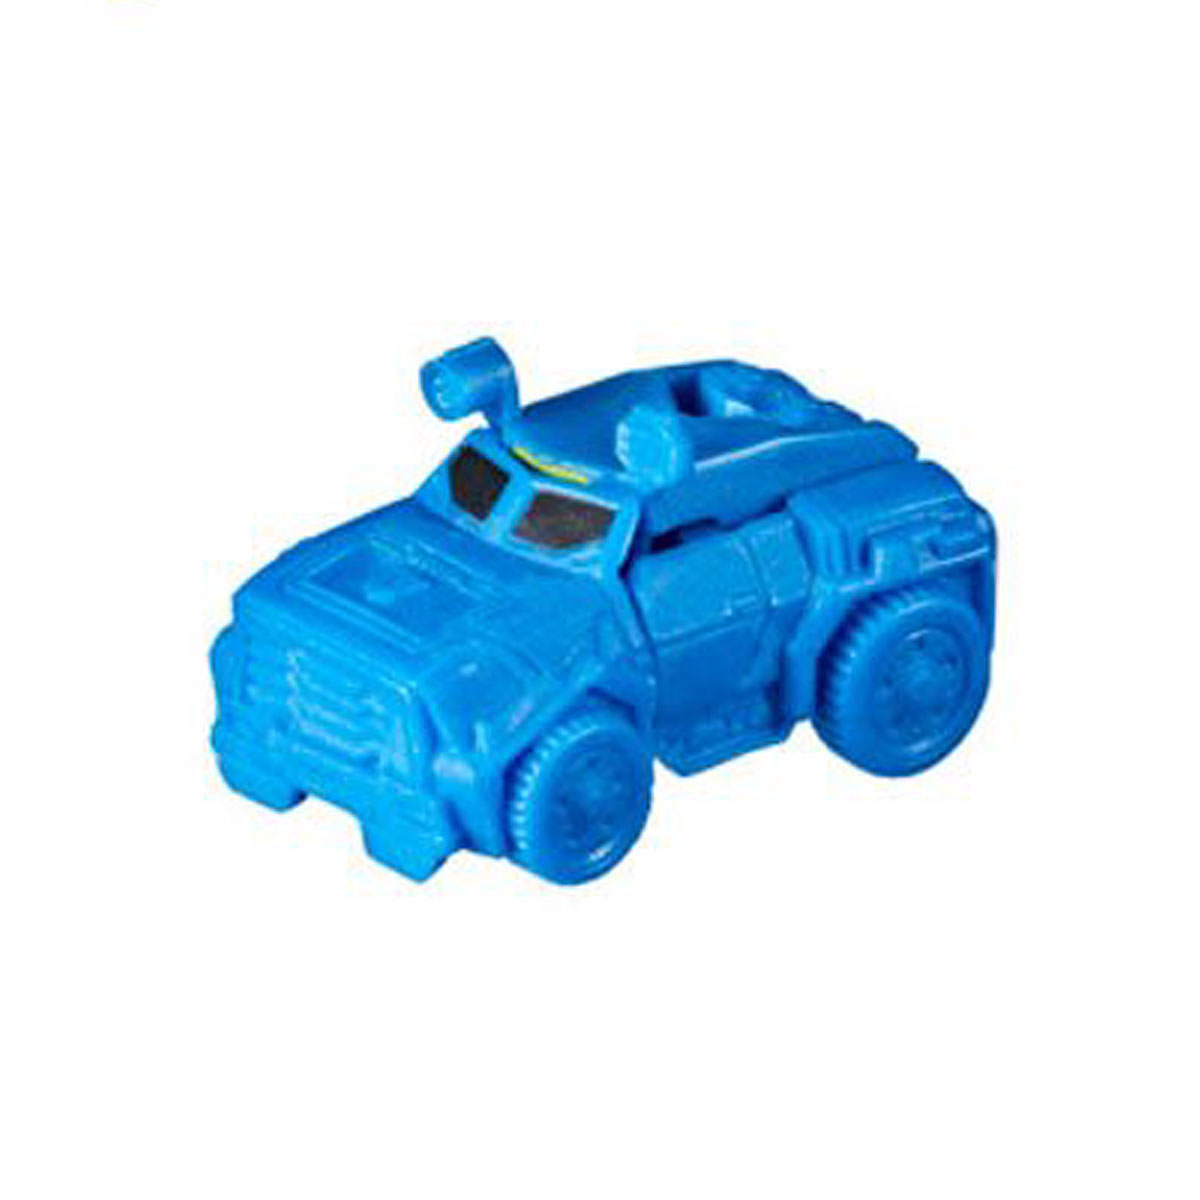 SOUNDWAVE Transformers Cyberverse Tiny Turbo Changers Series 5 Hasbro 2021 New